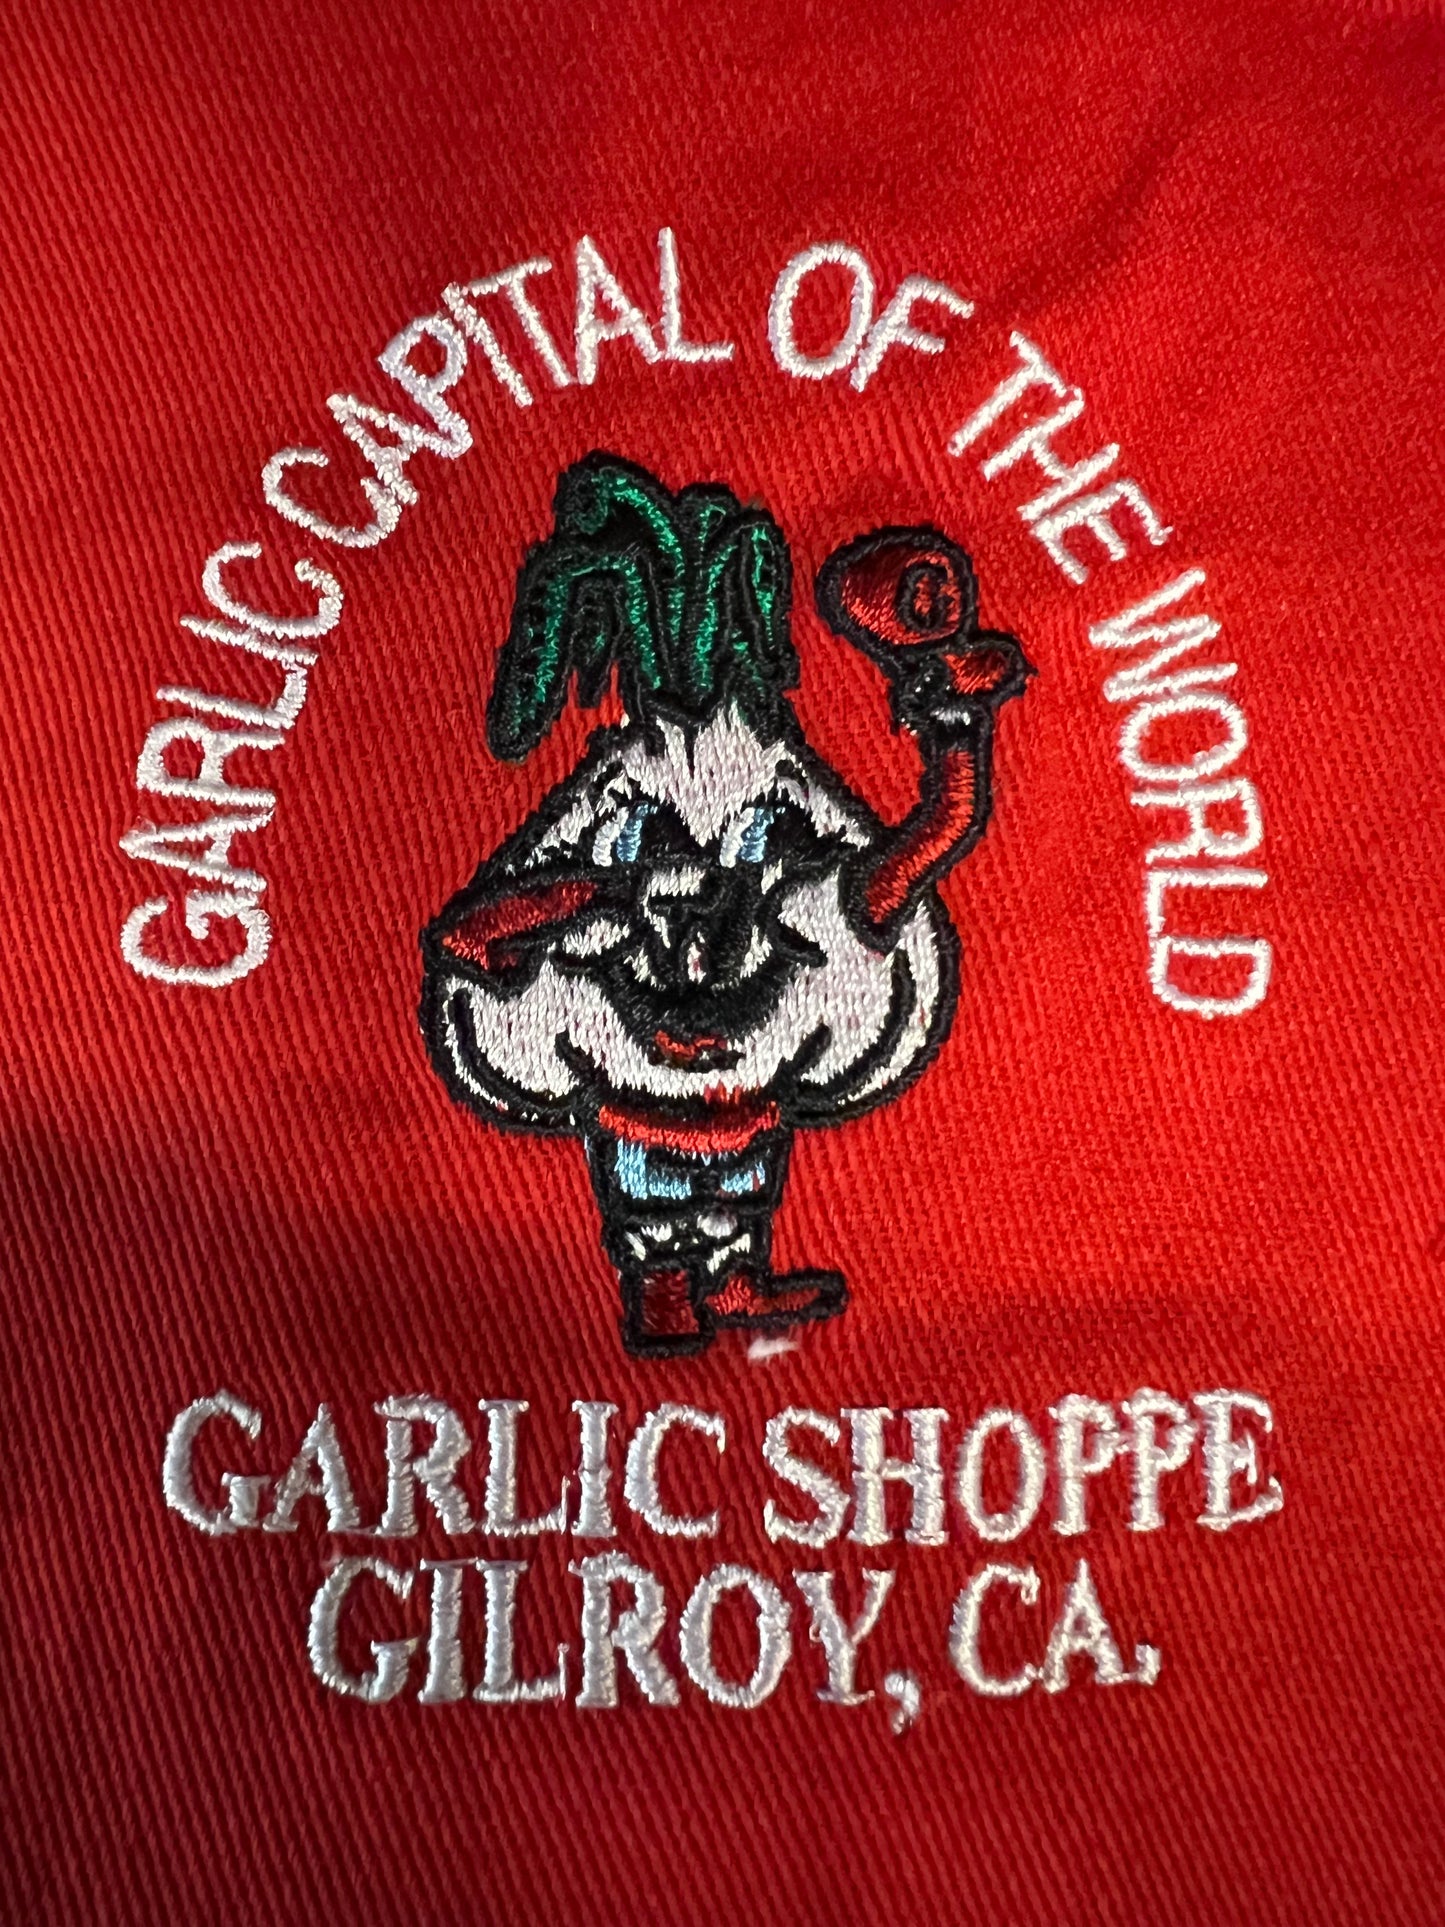 Apron Embroidered Red Garlic Capital of the world Garlic Dude Logo Garlic Shoppe Gilroy CA 